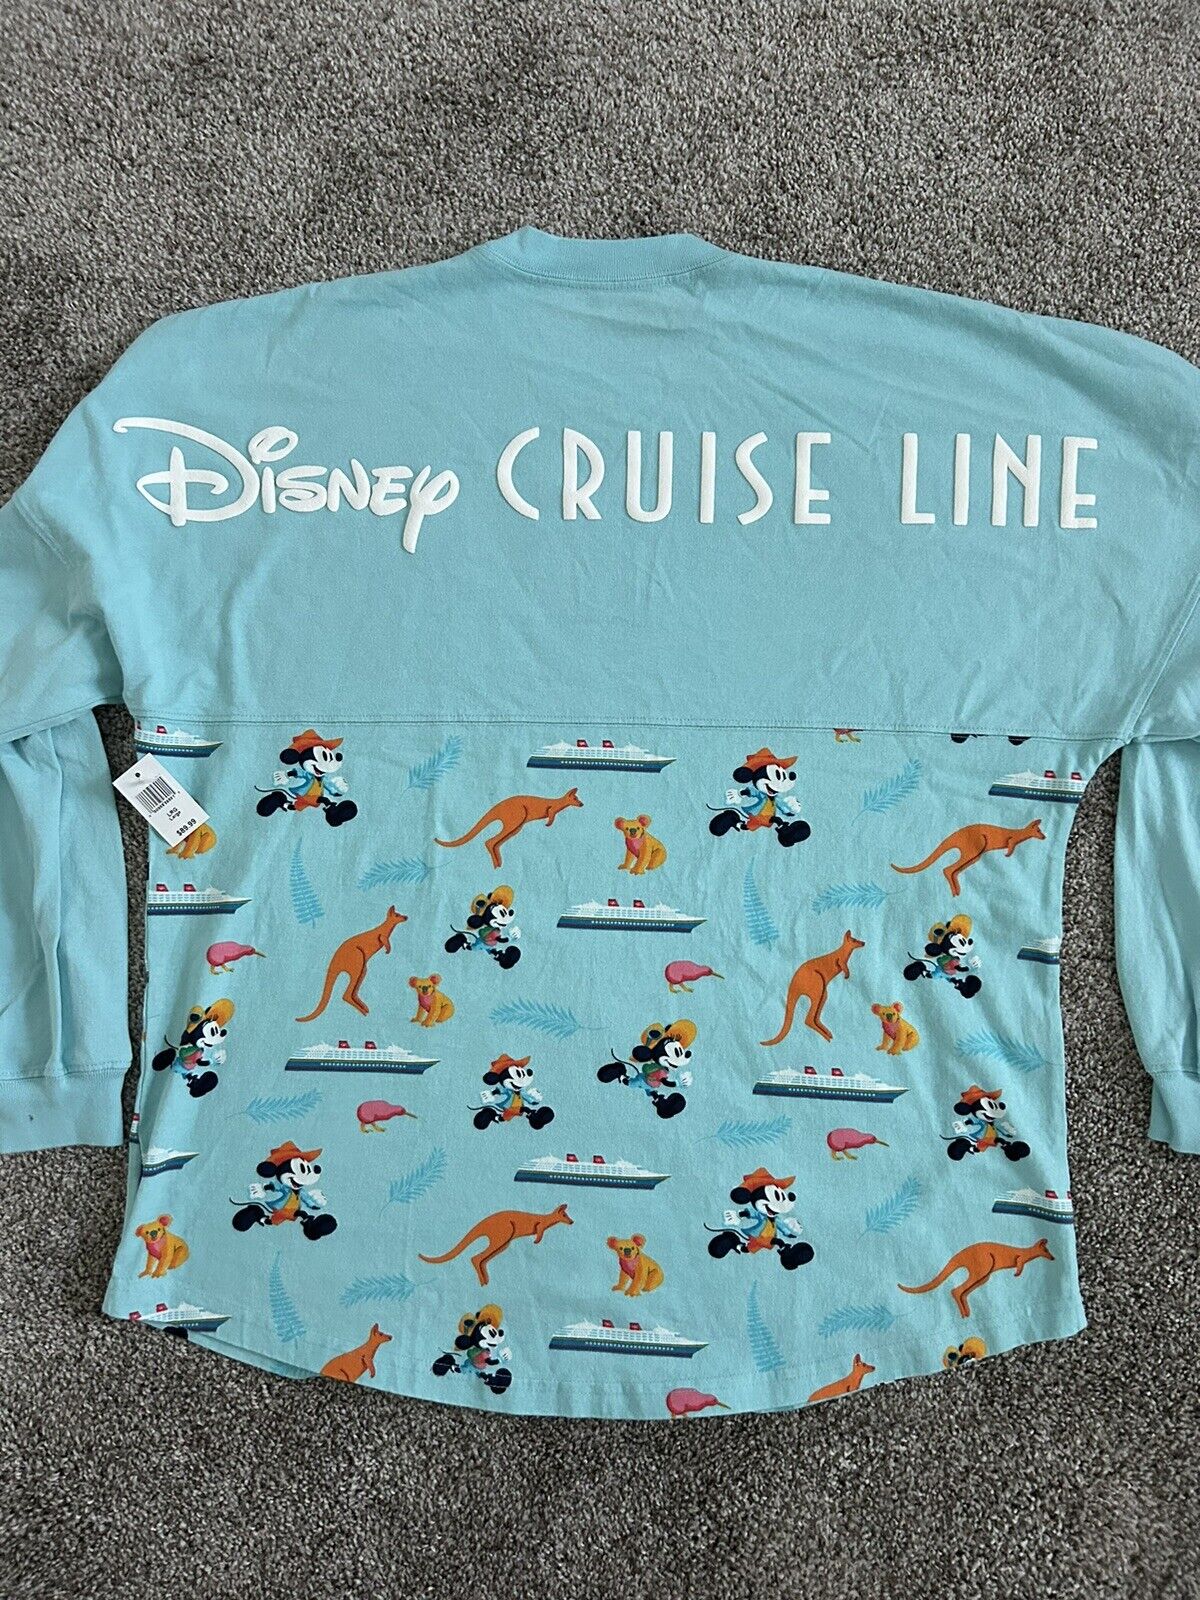 Disney Cruise Line Ship Castaway Cay Mickey Minnie Mouse Spirit Jersey Size L